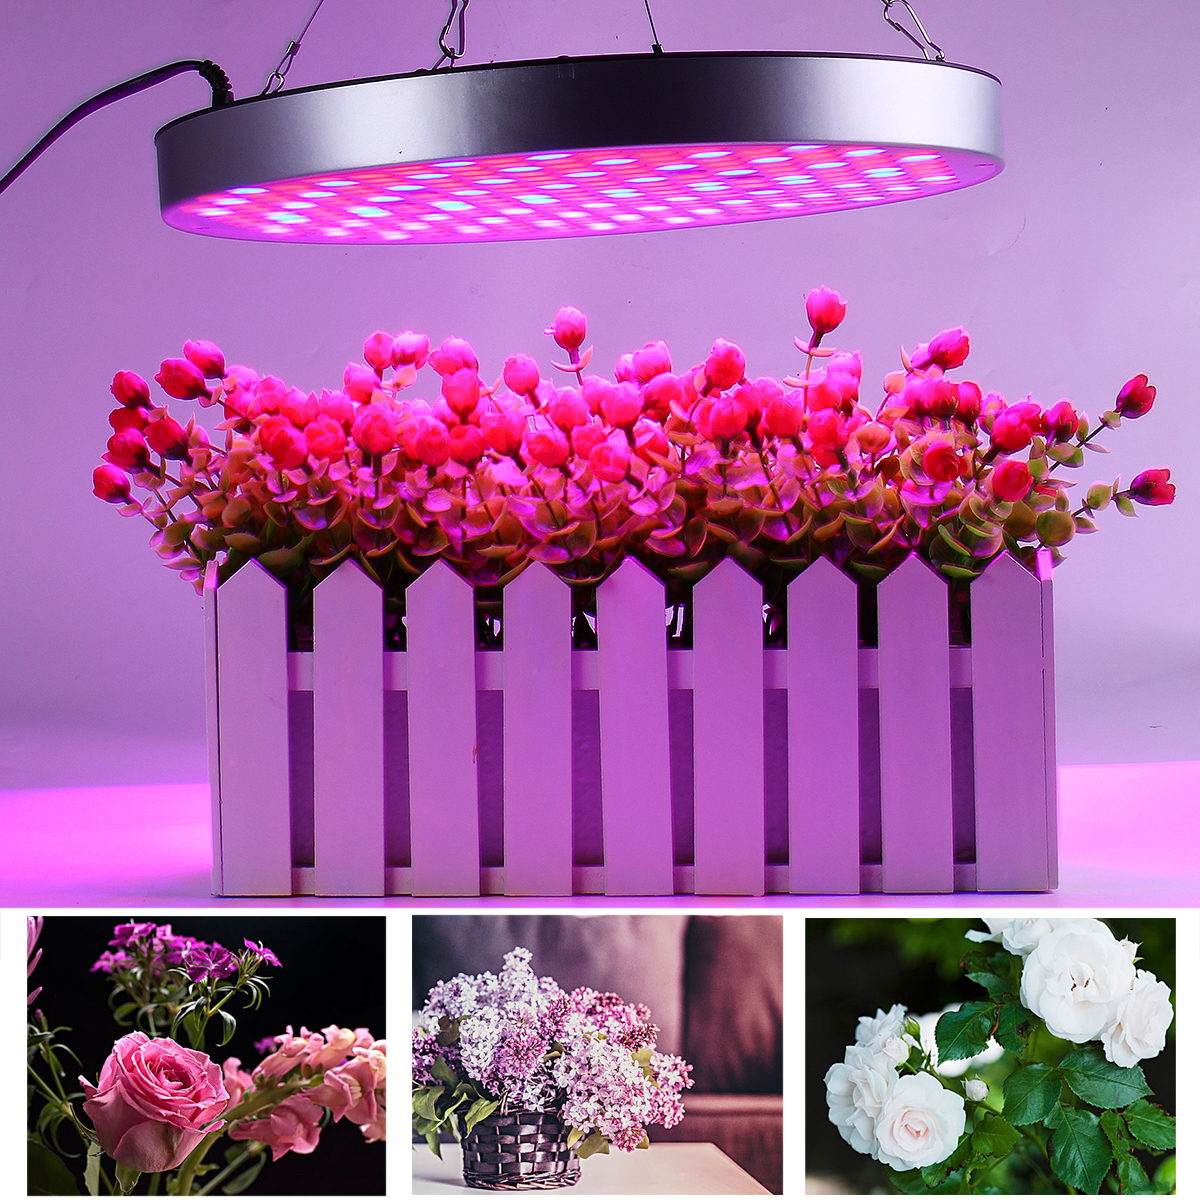 Spectrum-LED-Grow-Light-Indoor-Plant-Growing-Seeding-Bloom-Panel-Lamp-Flowers-1816511-8